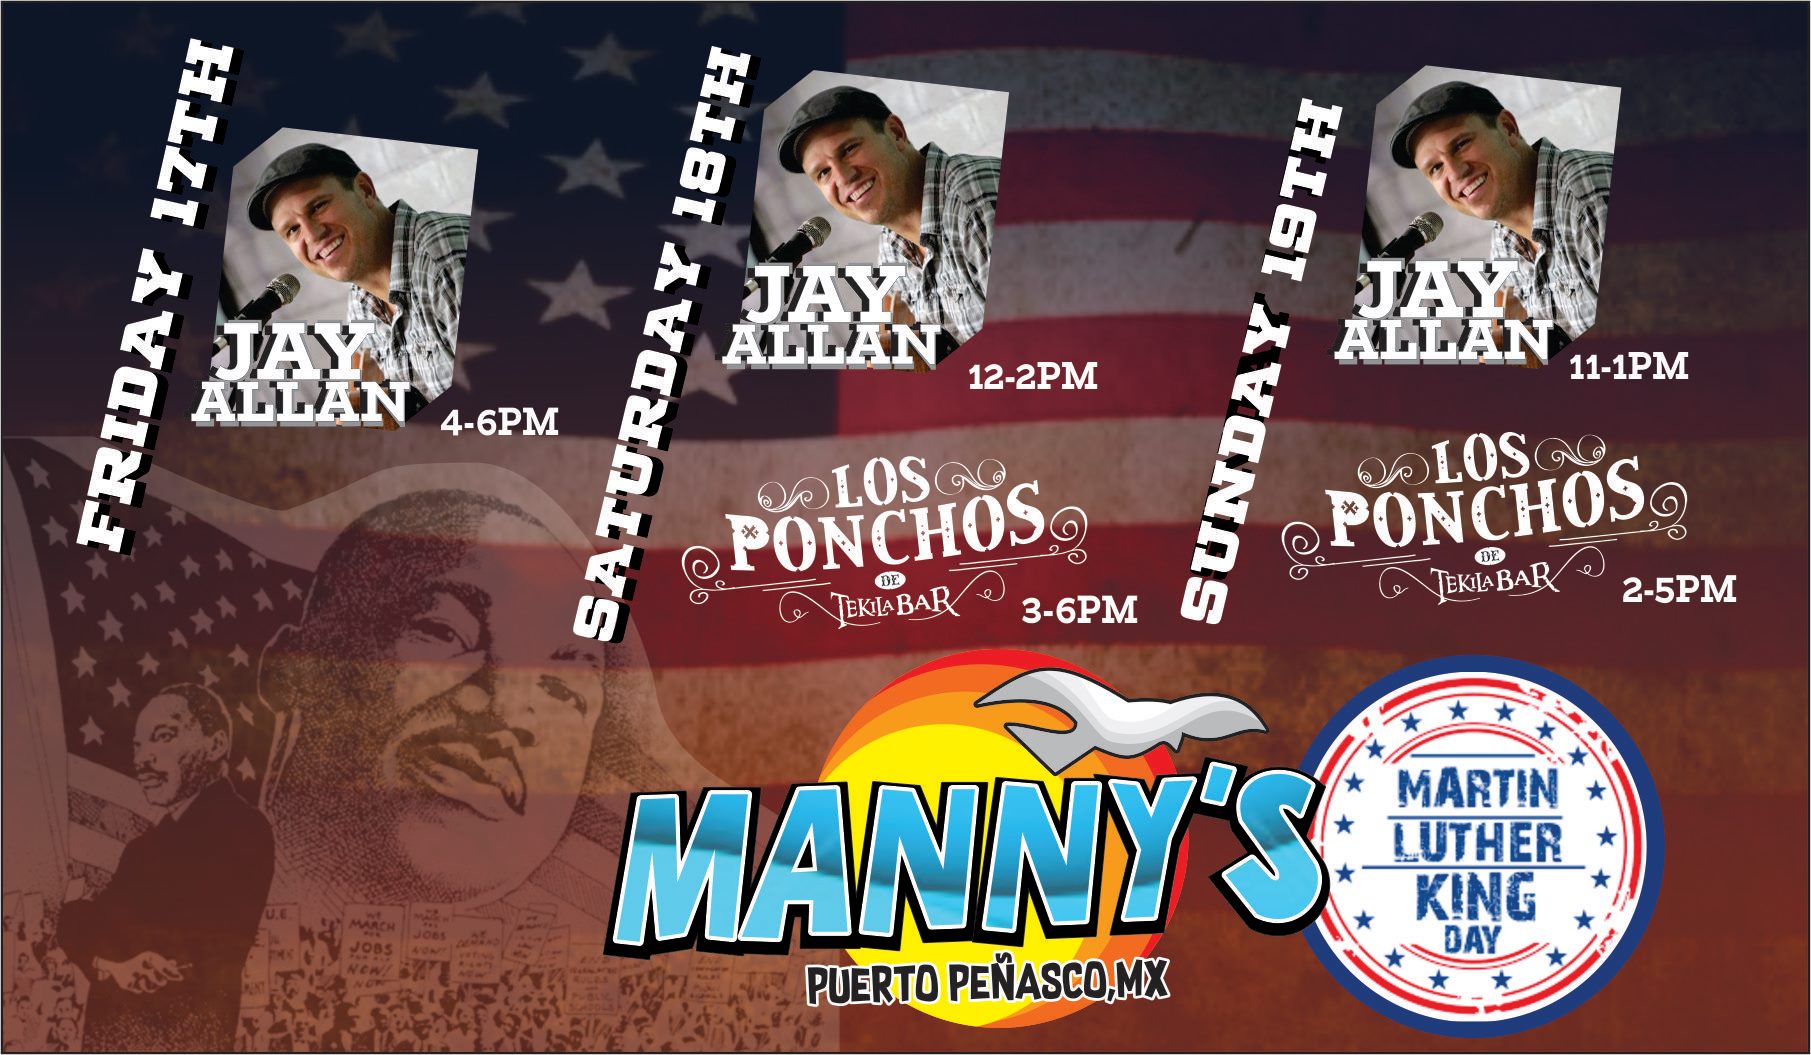 Jay Allan Live at Manny's Beach Club | Rocky Point 360